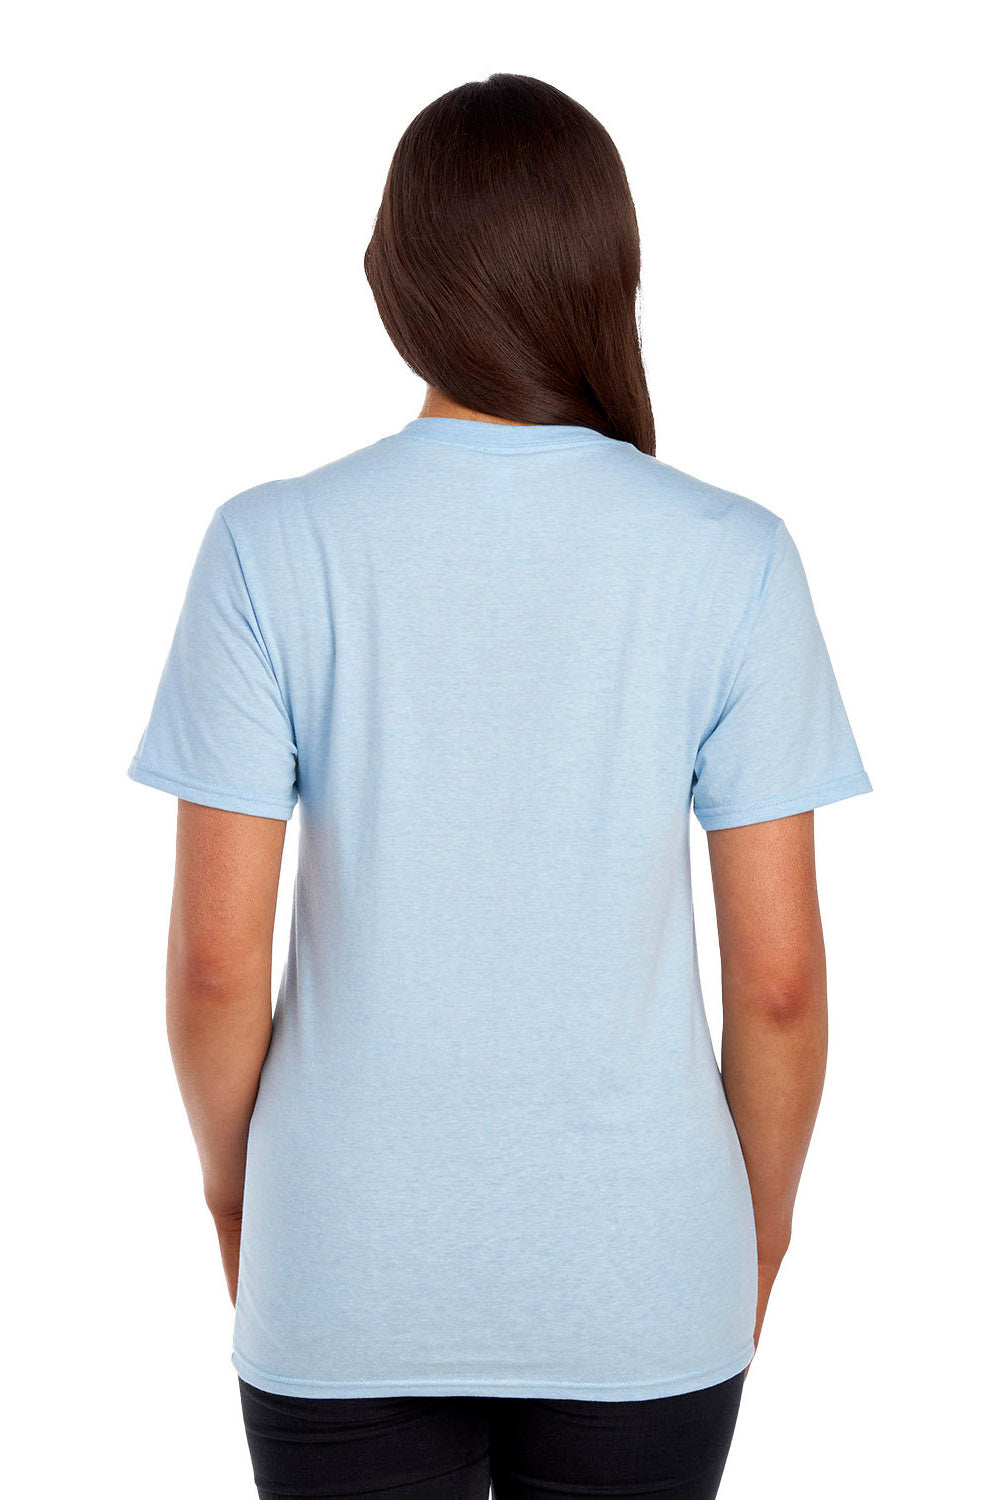 Fruit Of The Loom IC47MR Mens Iconic Short Sleeve Crewneck T-Shirt Heather Cloud Blue Back